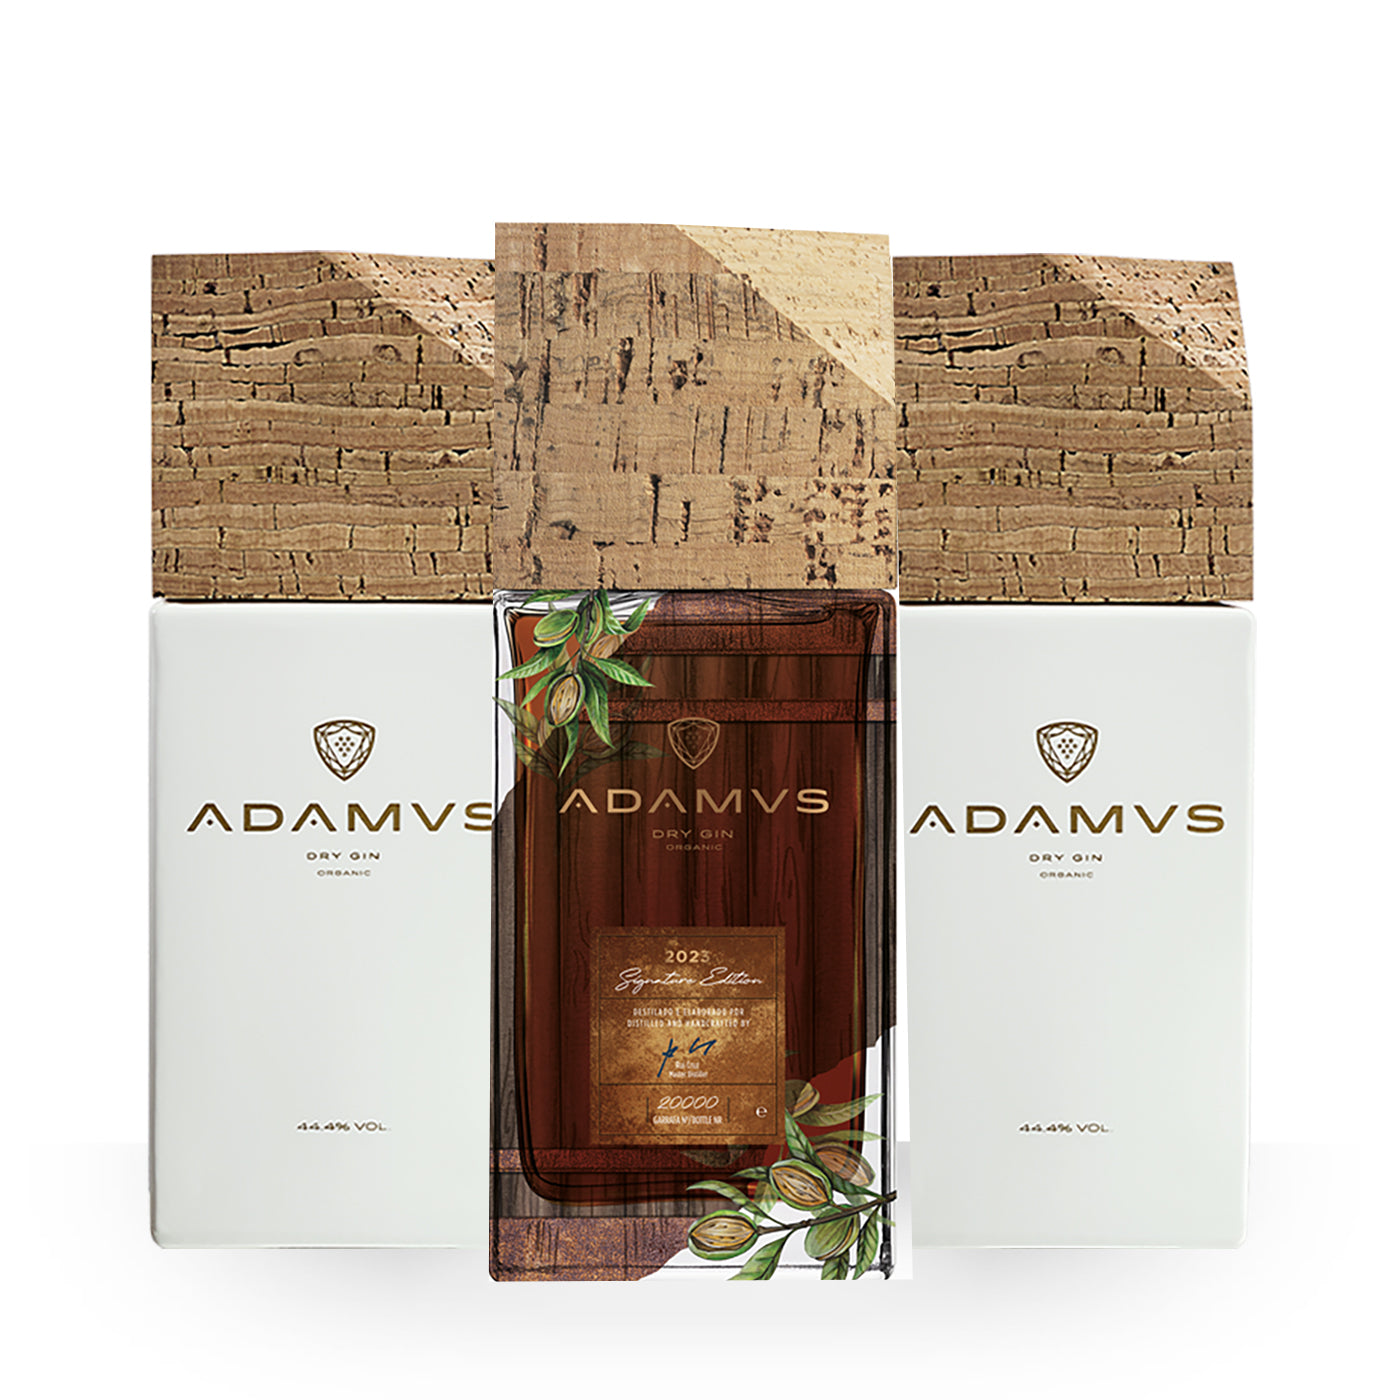 Adamus Gin Lovers Pack - 2 Adamus Organic Dry Gin & 1 Adamus Signature Edition 2023